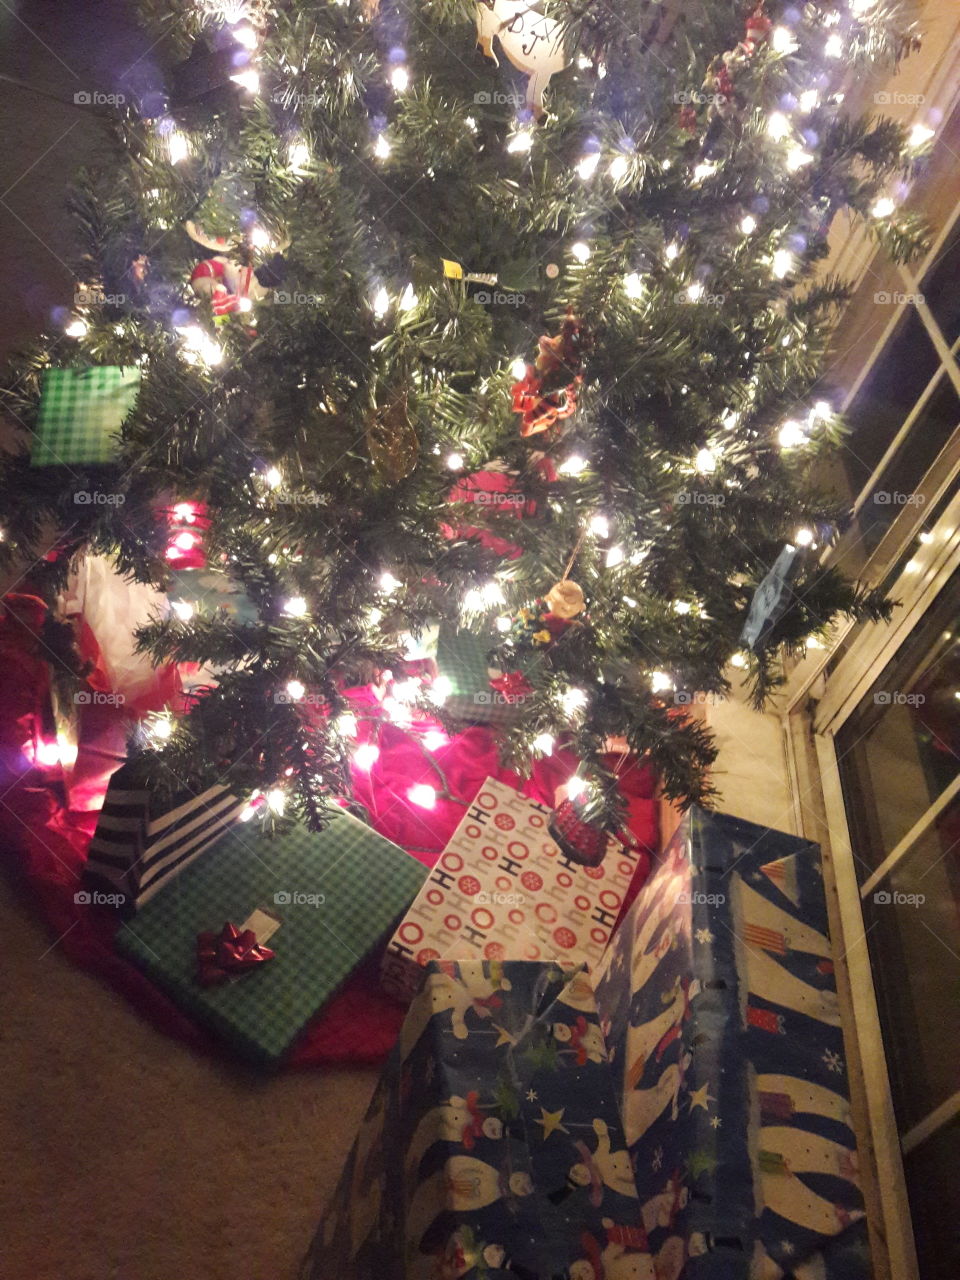 Presents under the tree.